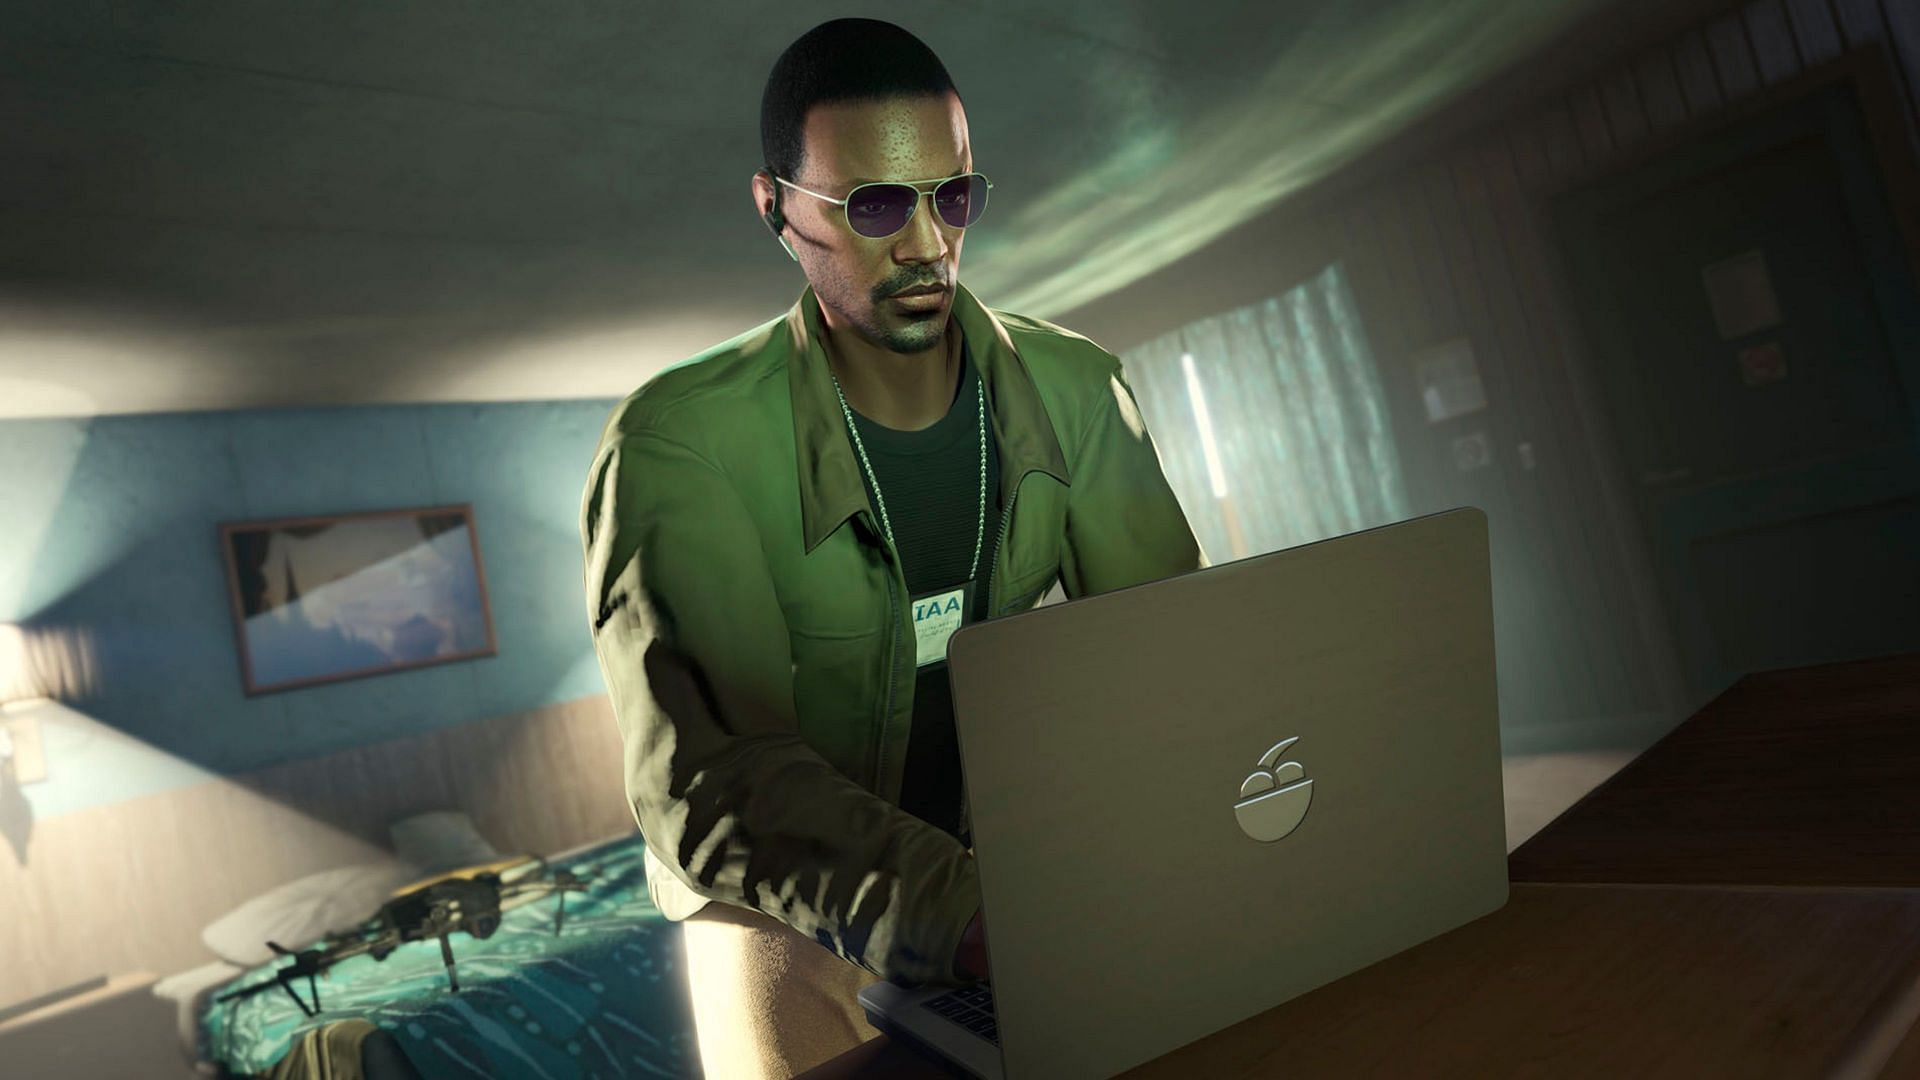 An IAA agent (Image via Rockstar Games)